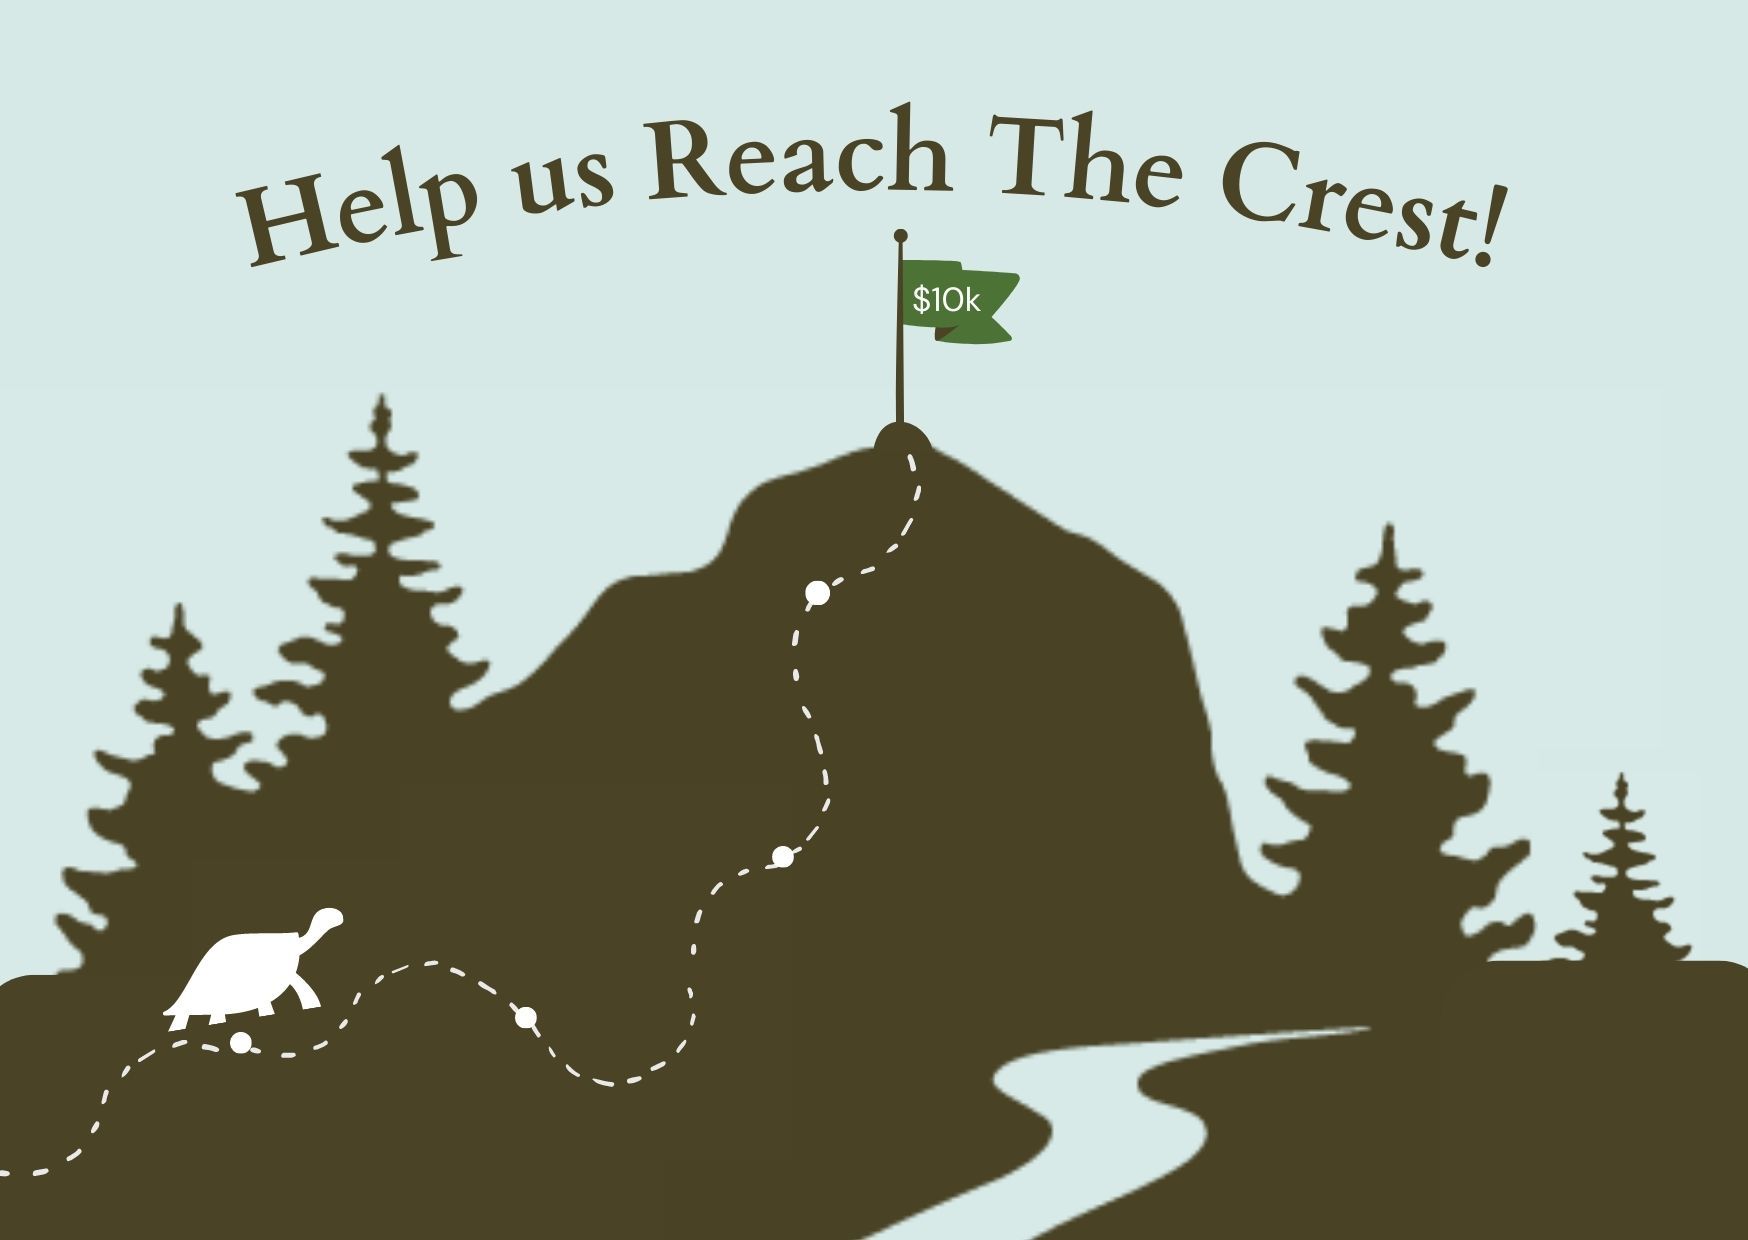 reach.the.crest.fundraiser